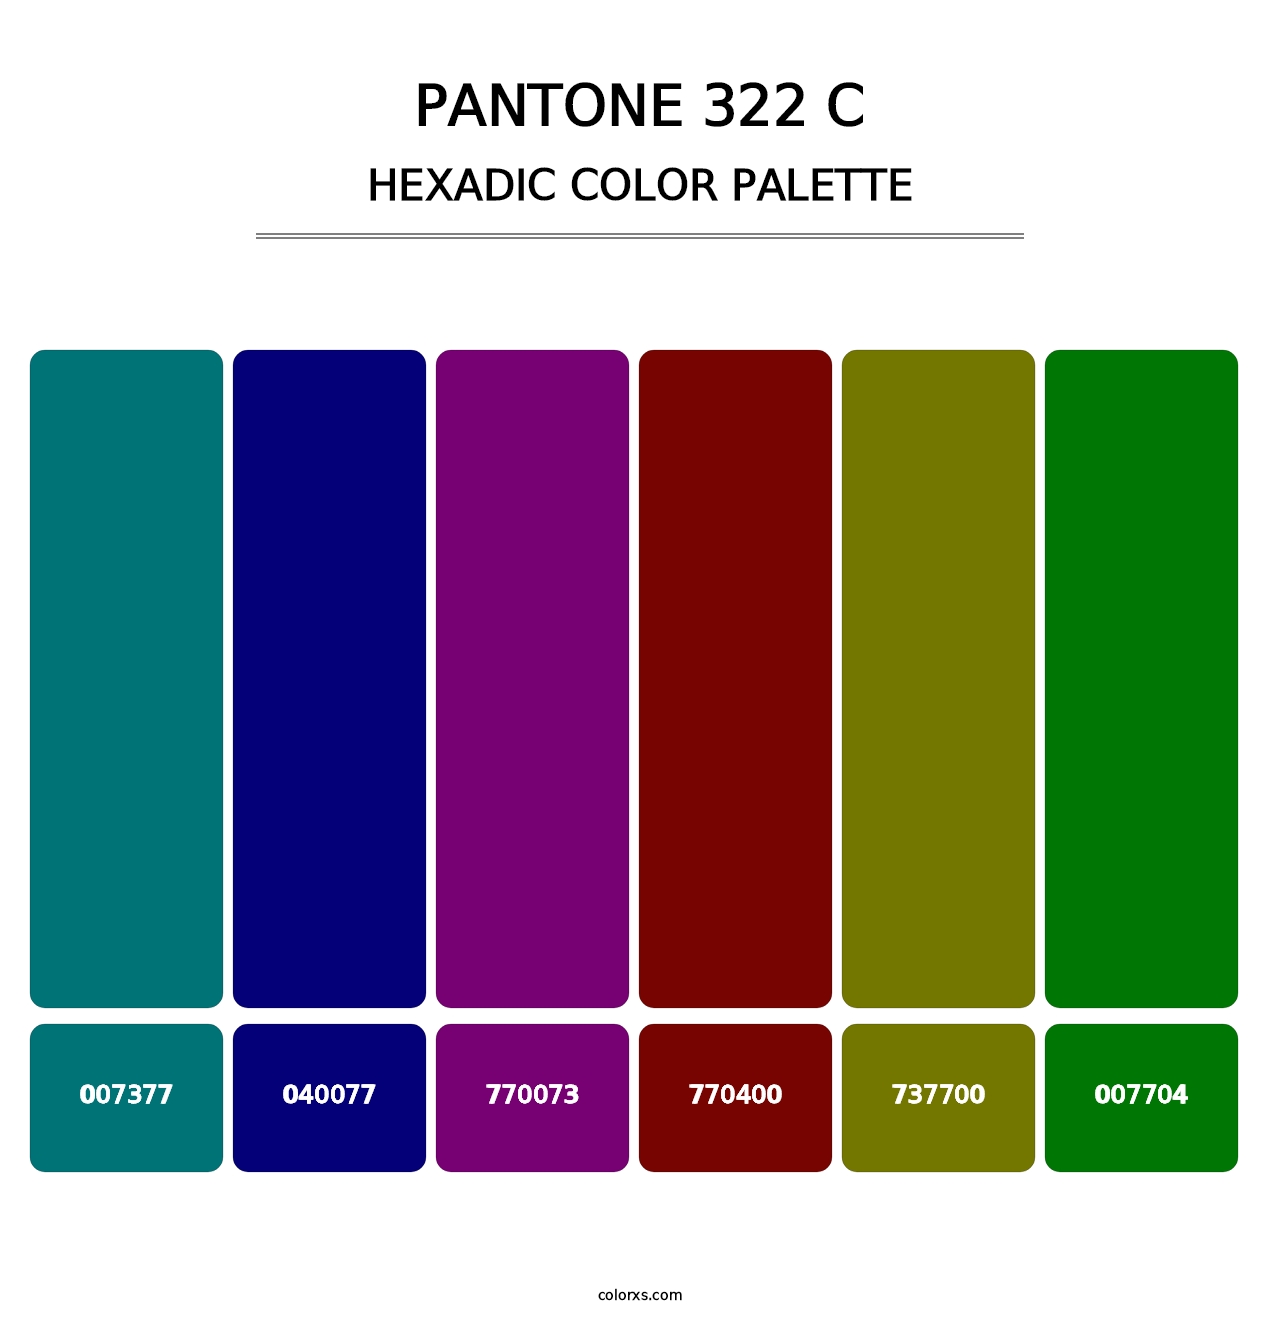 PANTONE 322 C - Hexadic Color Palette